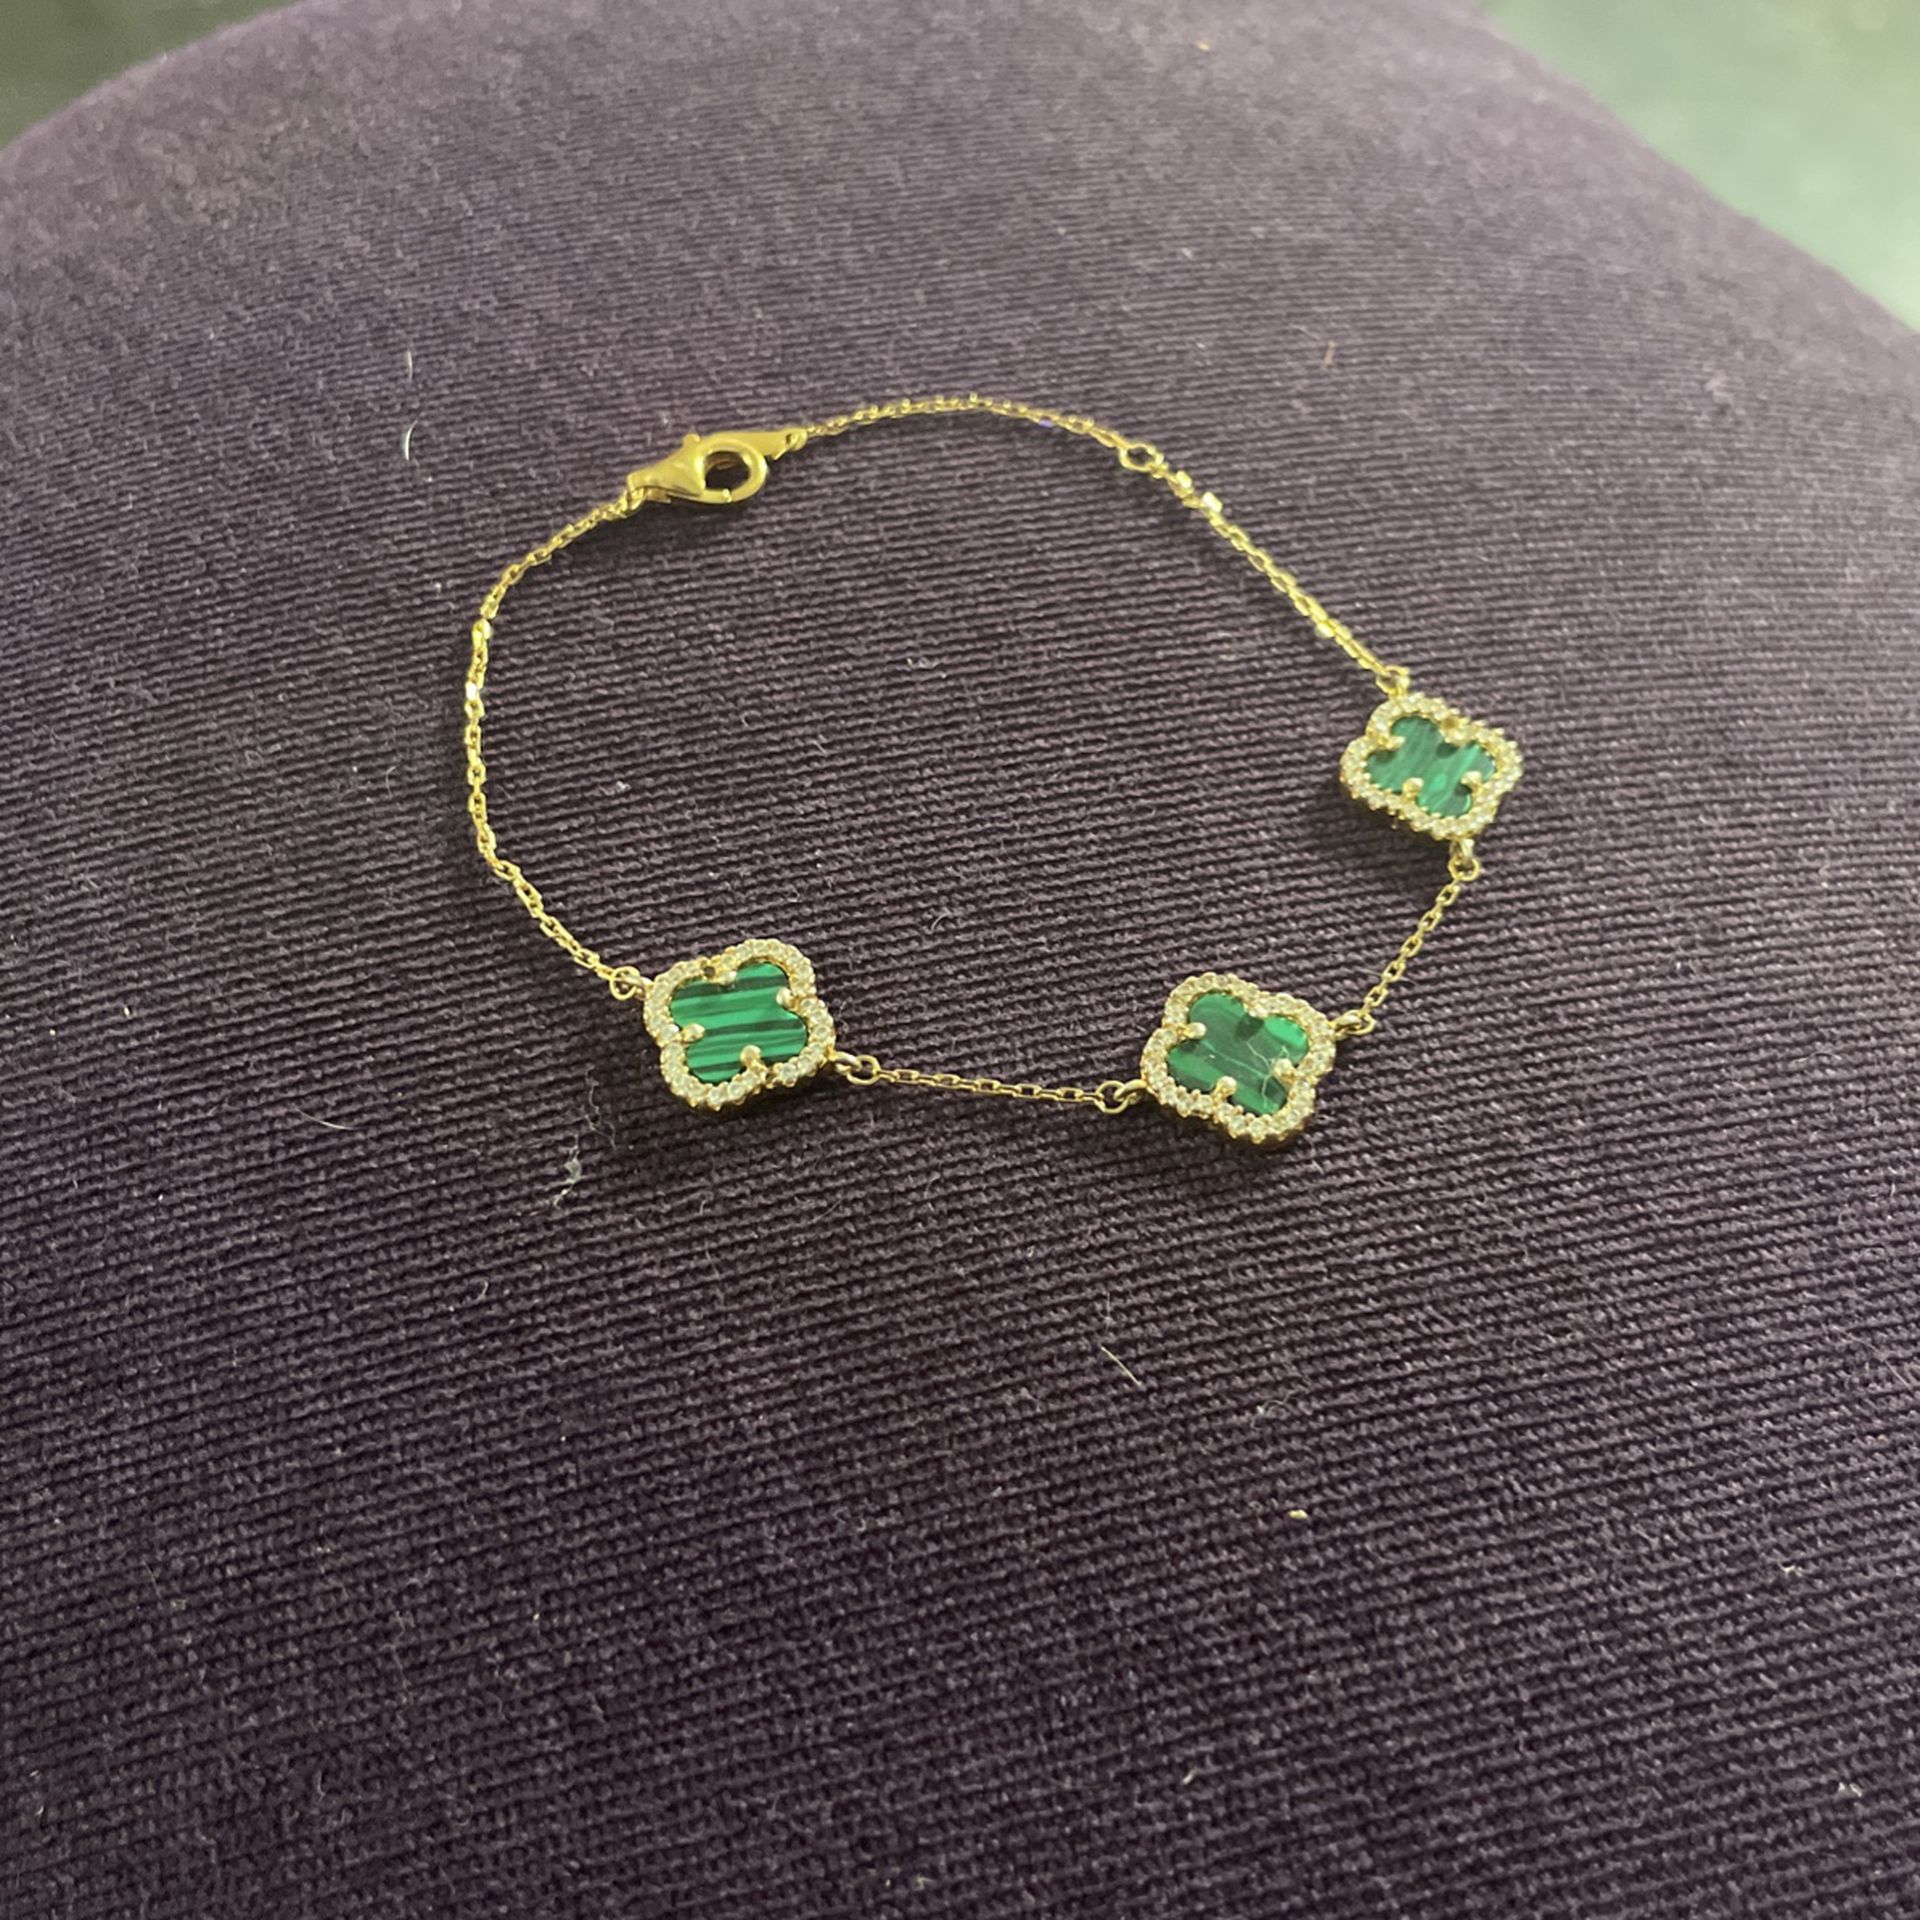 Four-leaf Clover Bracelet for Sale in Schertz, TX - OfferUp